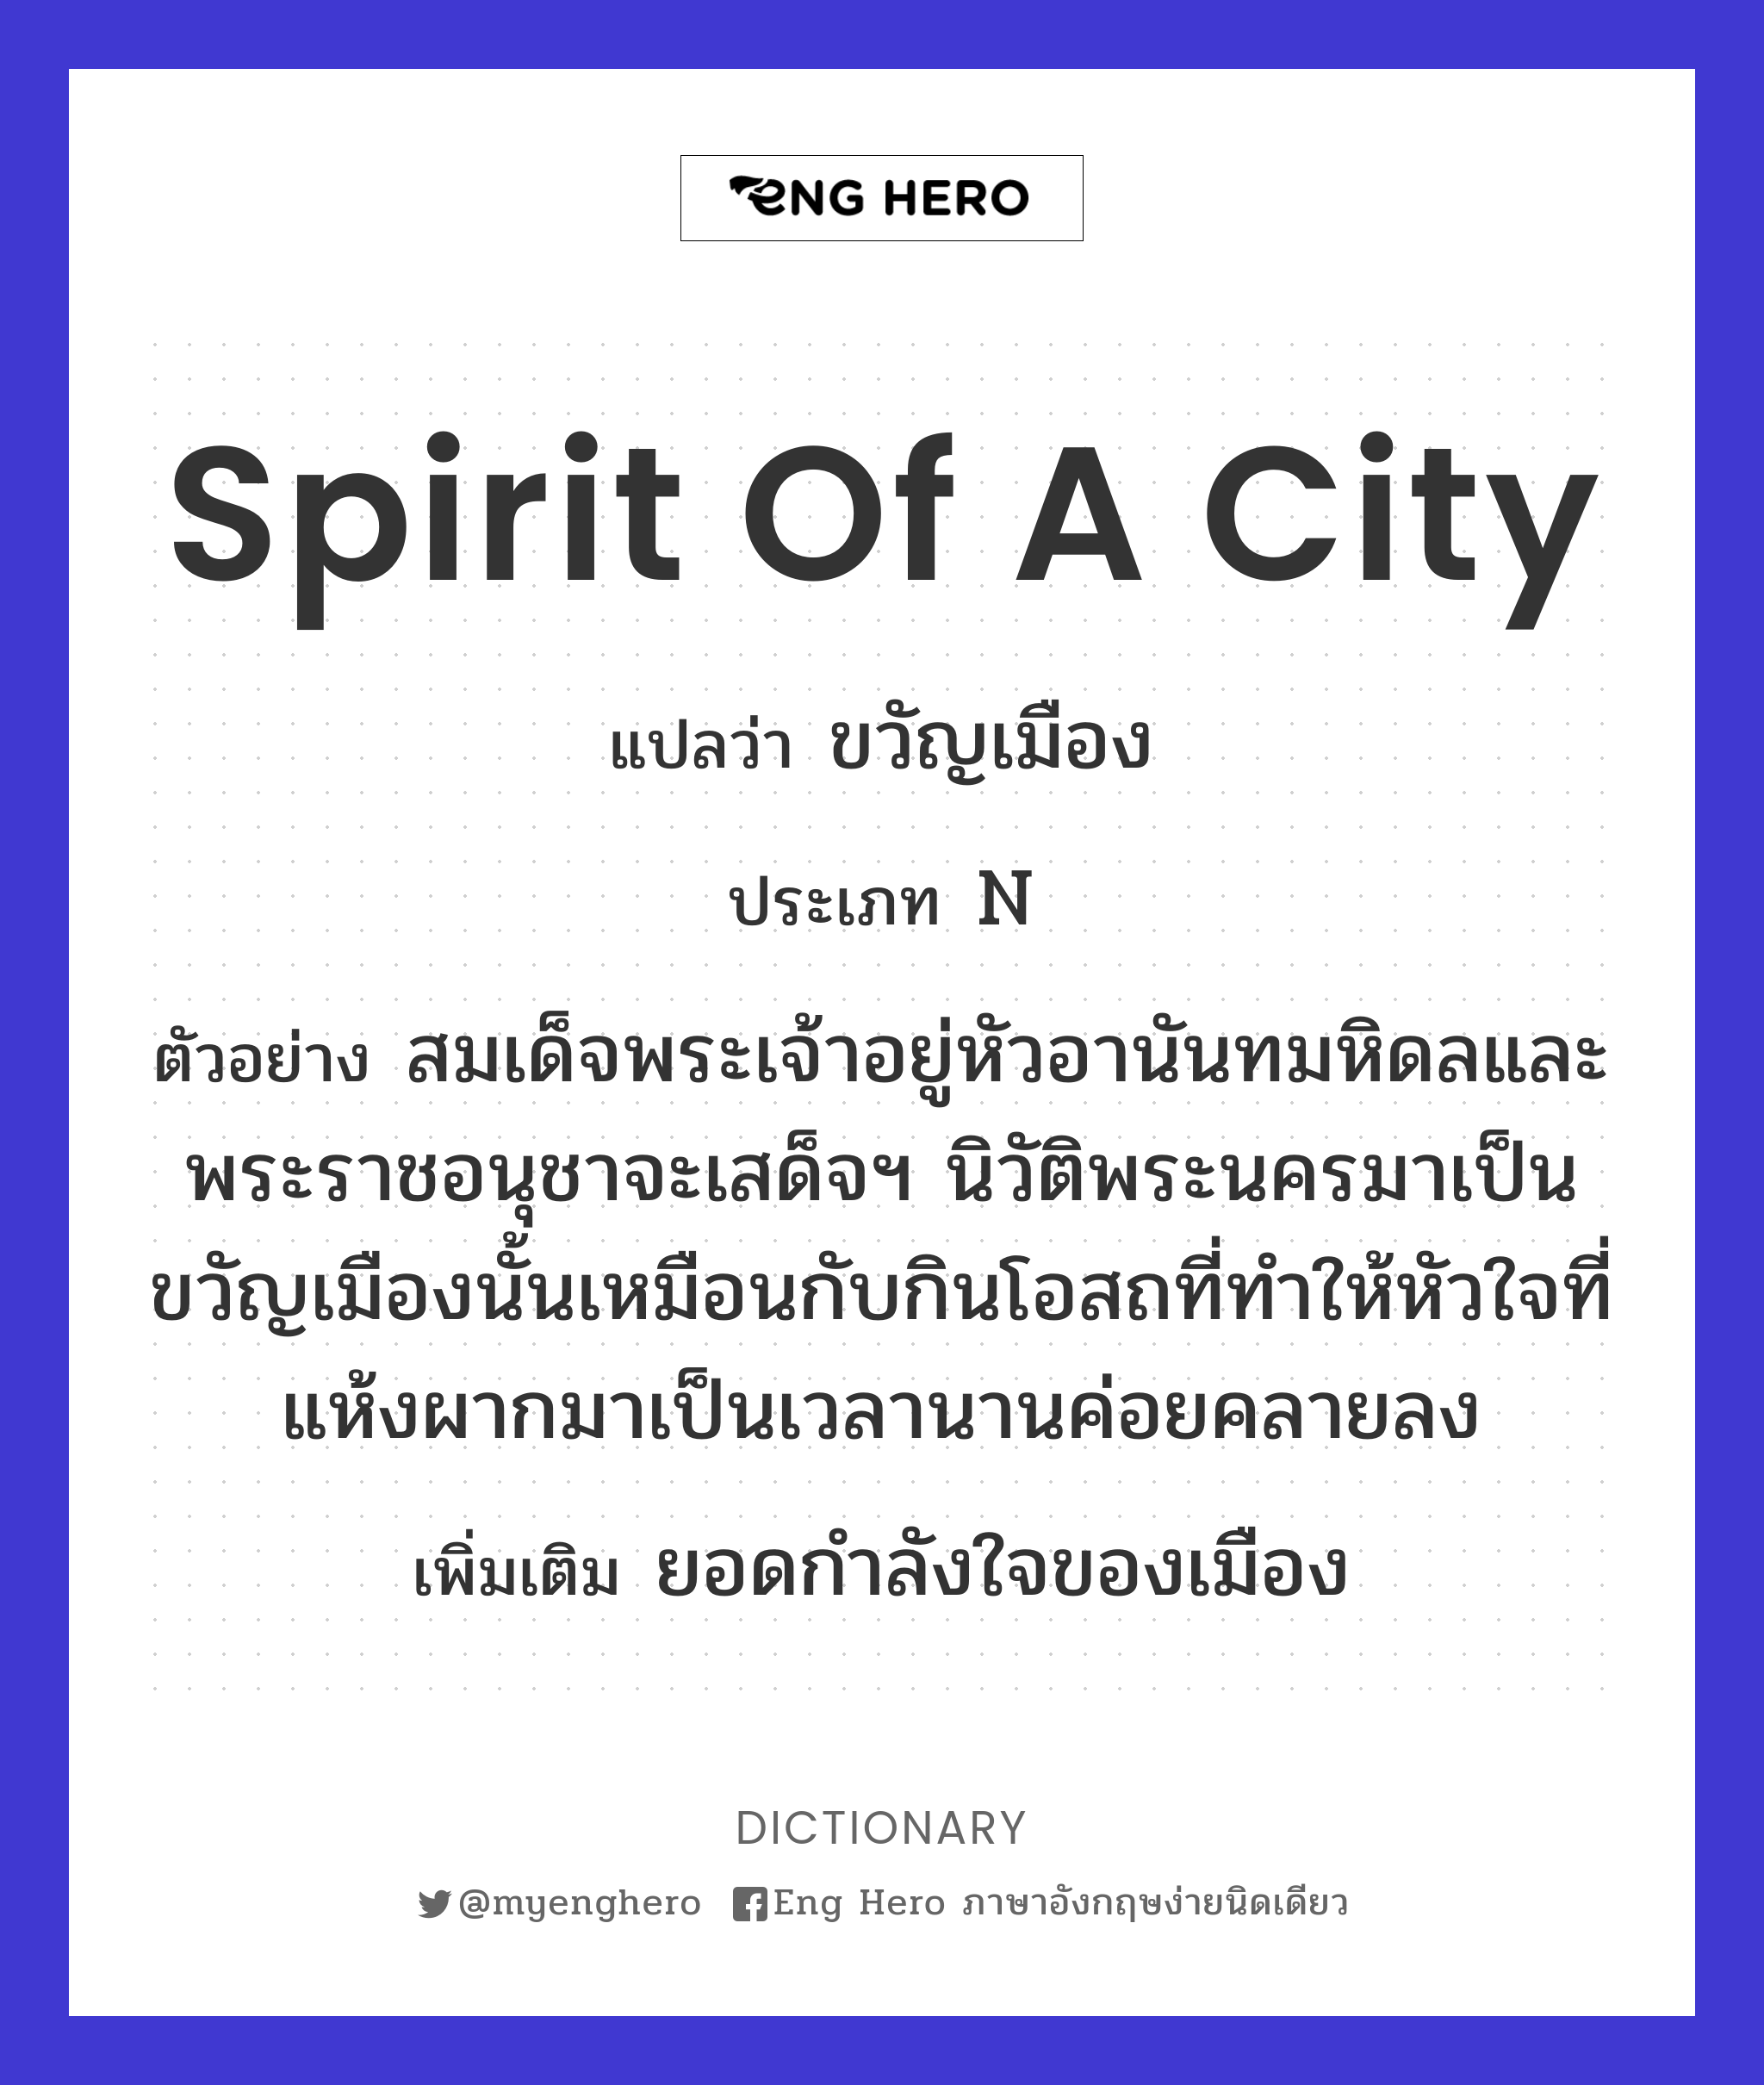 spirit of a city